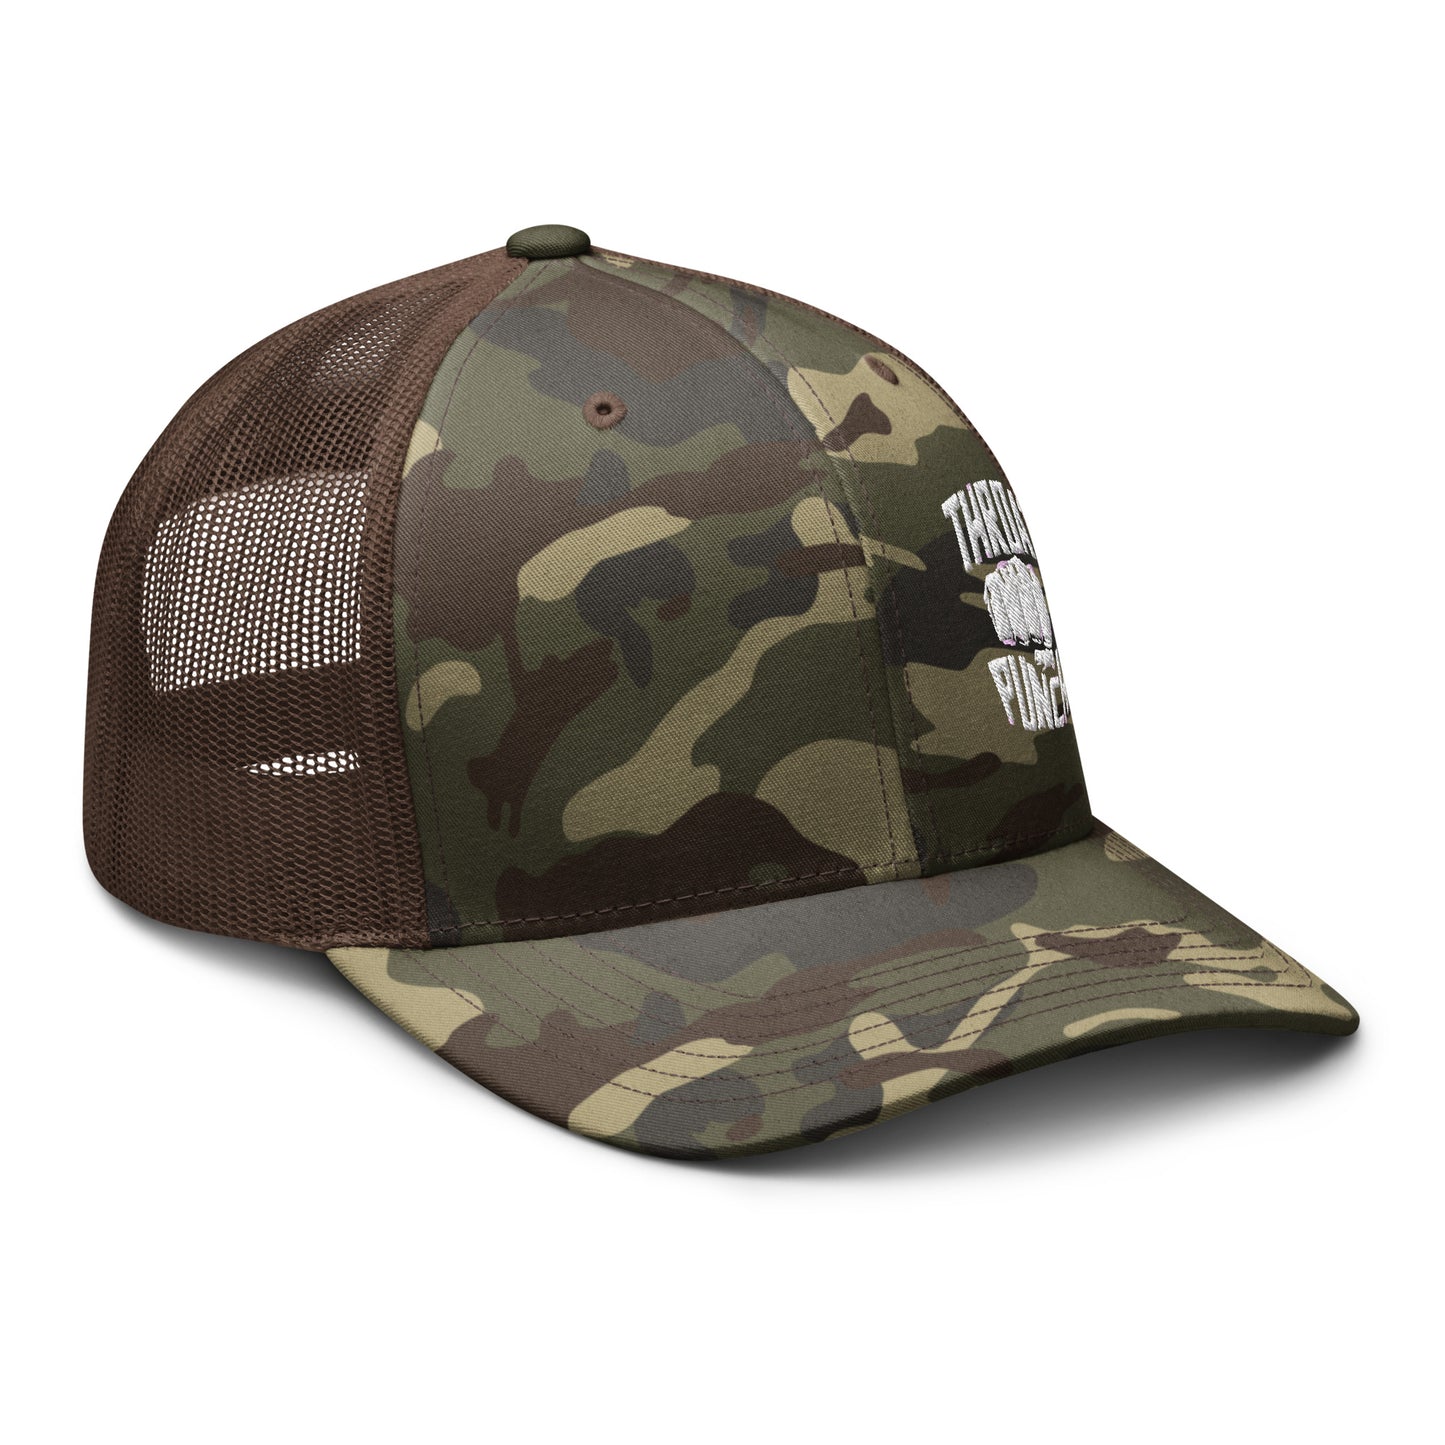 Throat Punch Camouflage trucker hat